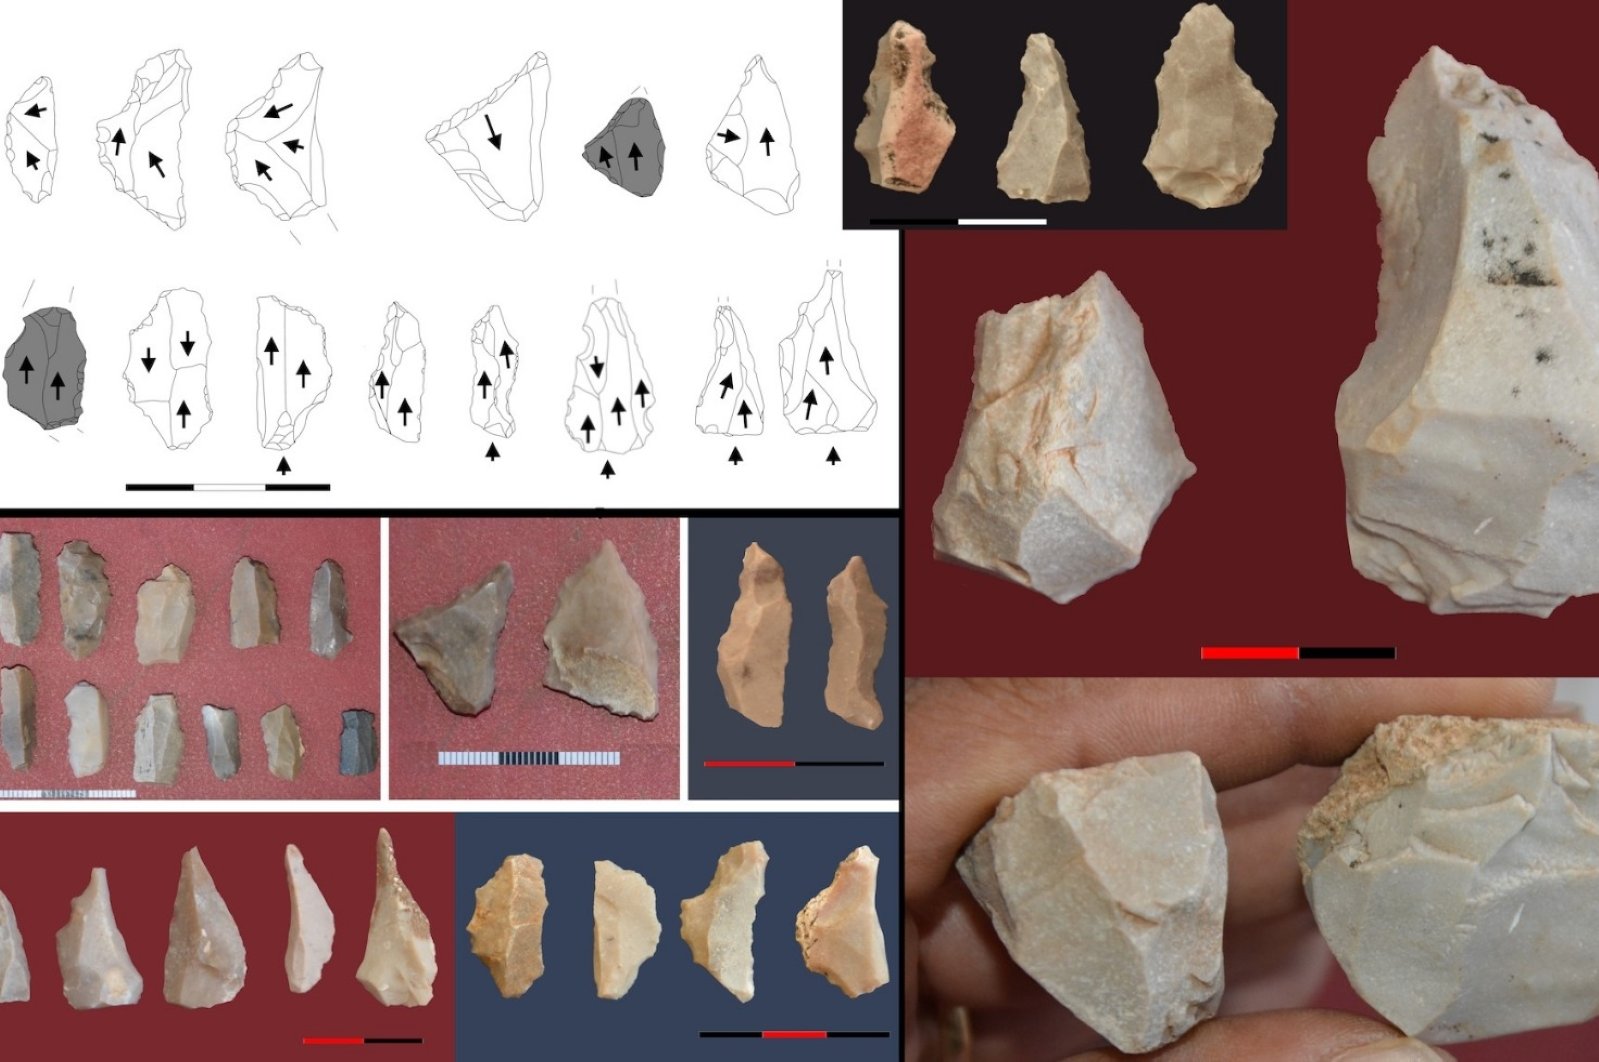 Survei arkeologi di Mardin Türkiye mengungkap pemukiman kuno